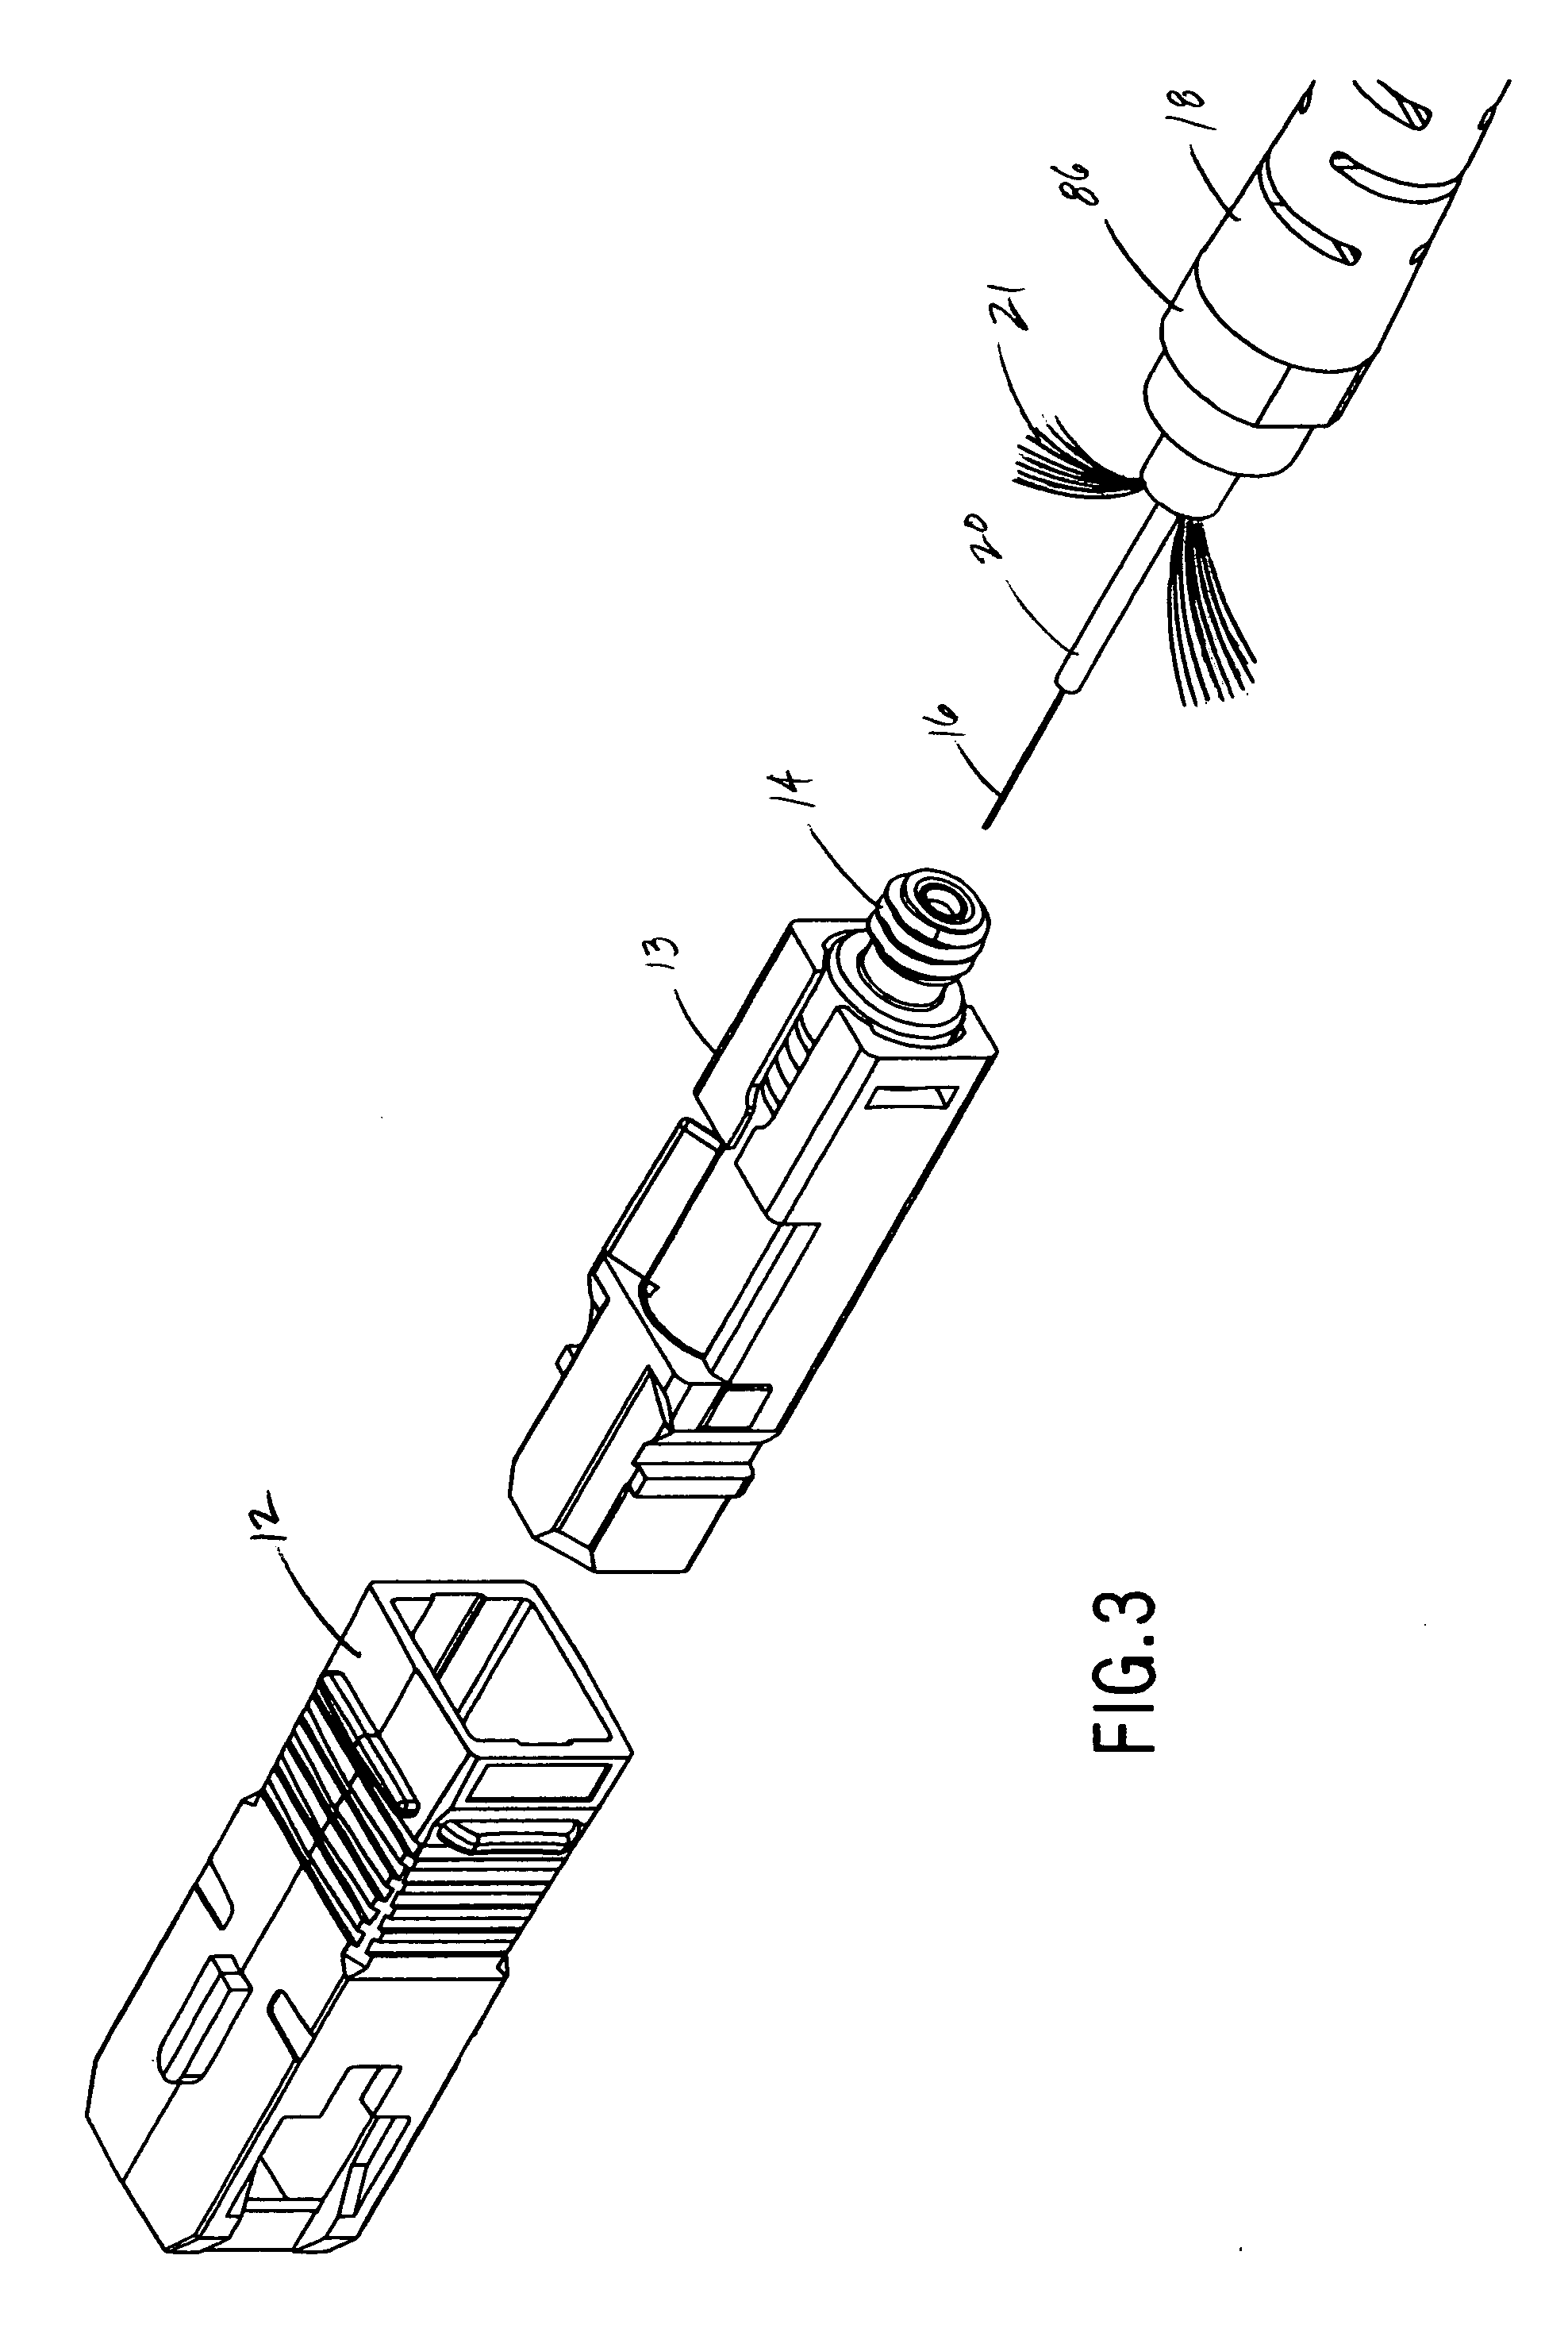 Reversible fiber optic connector